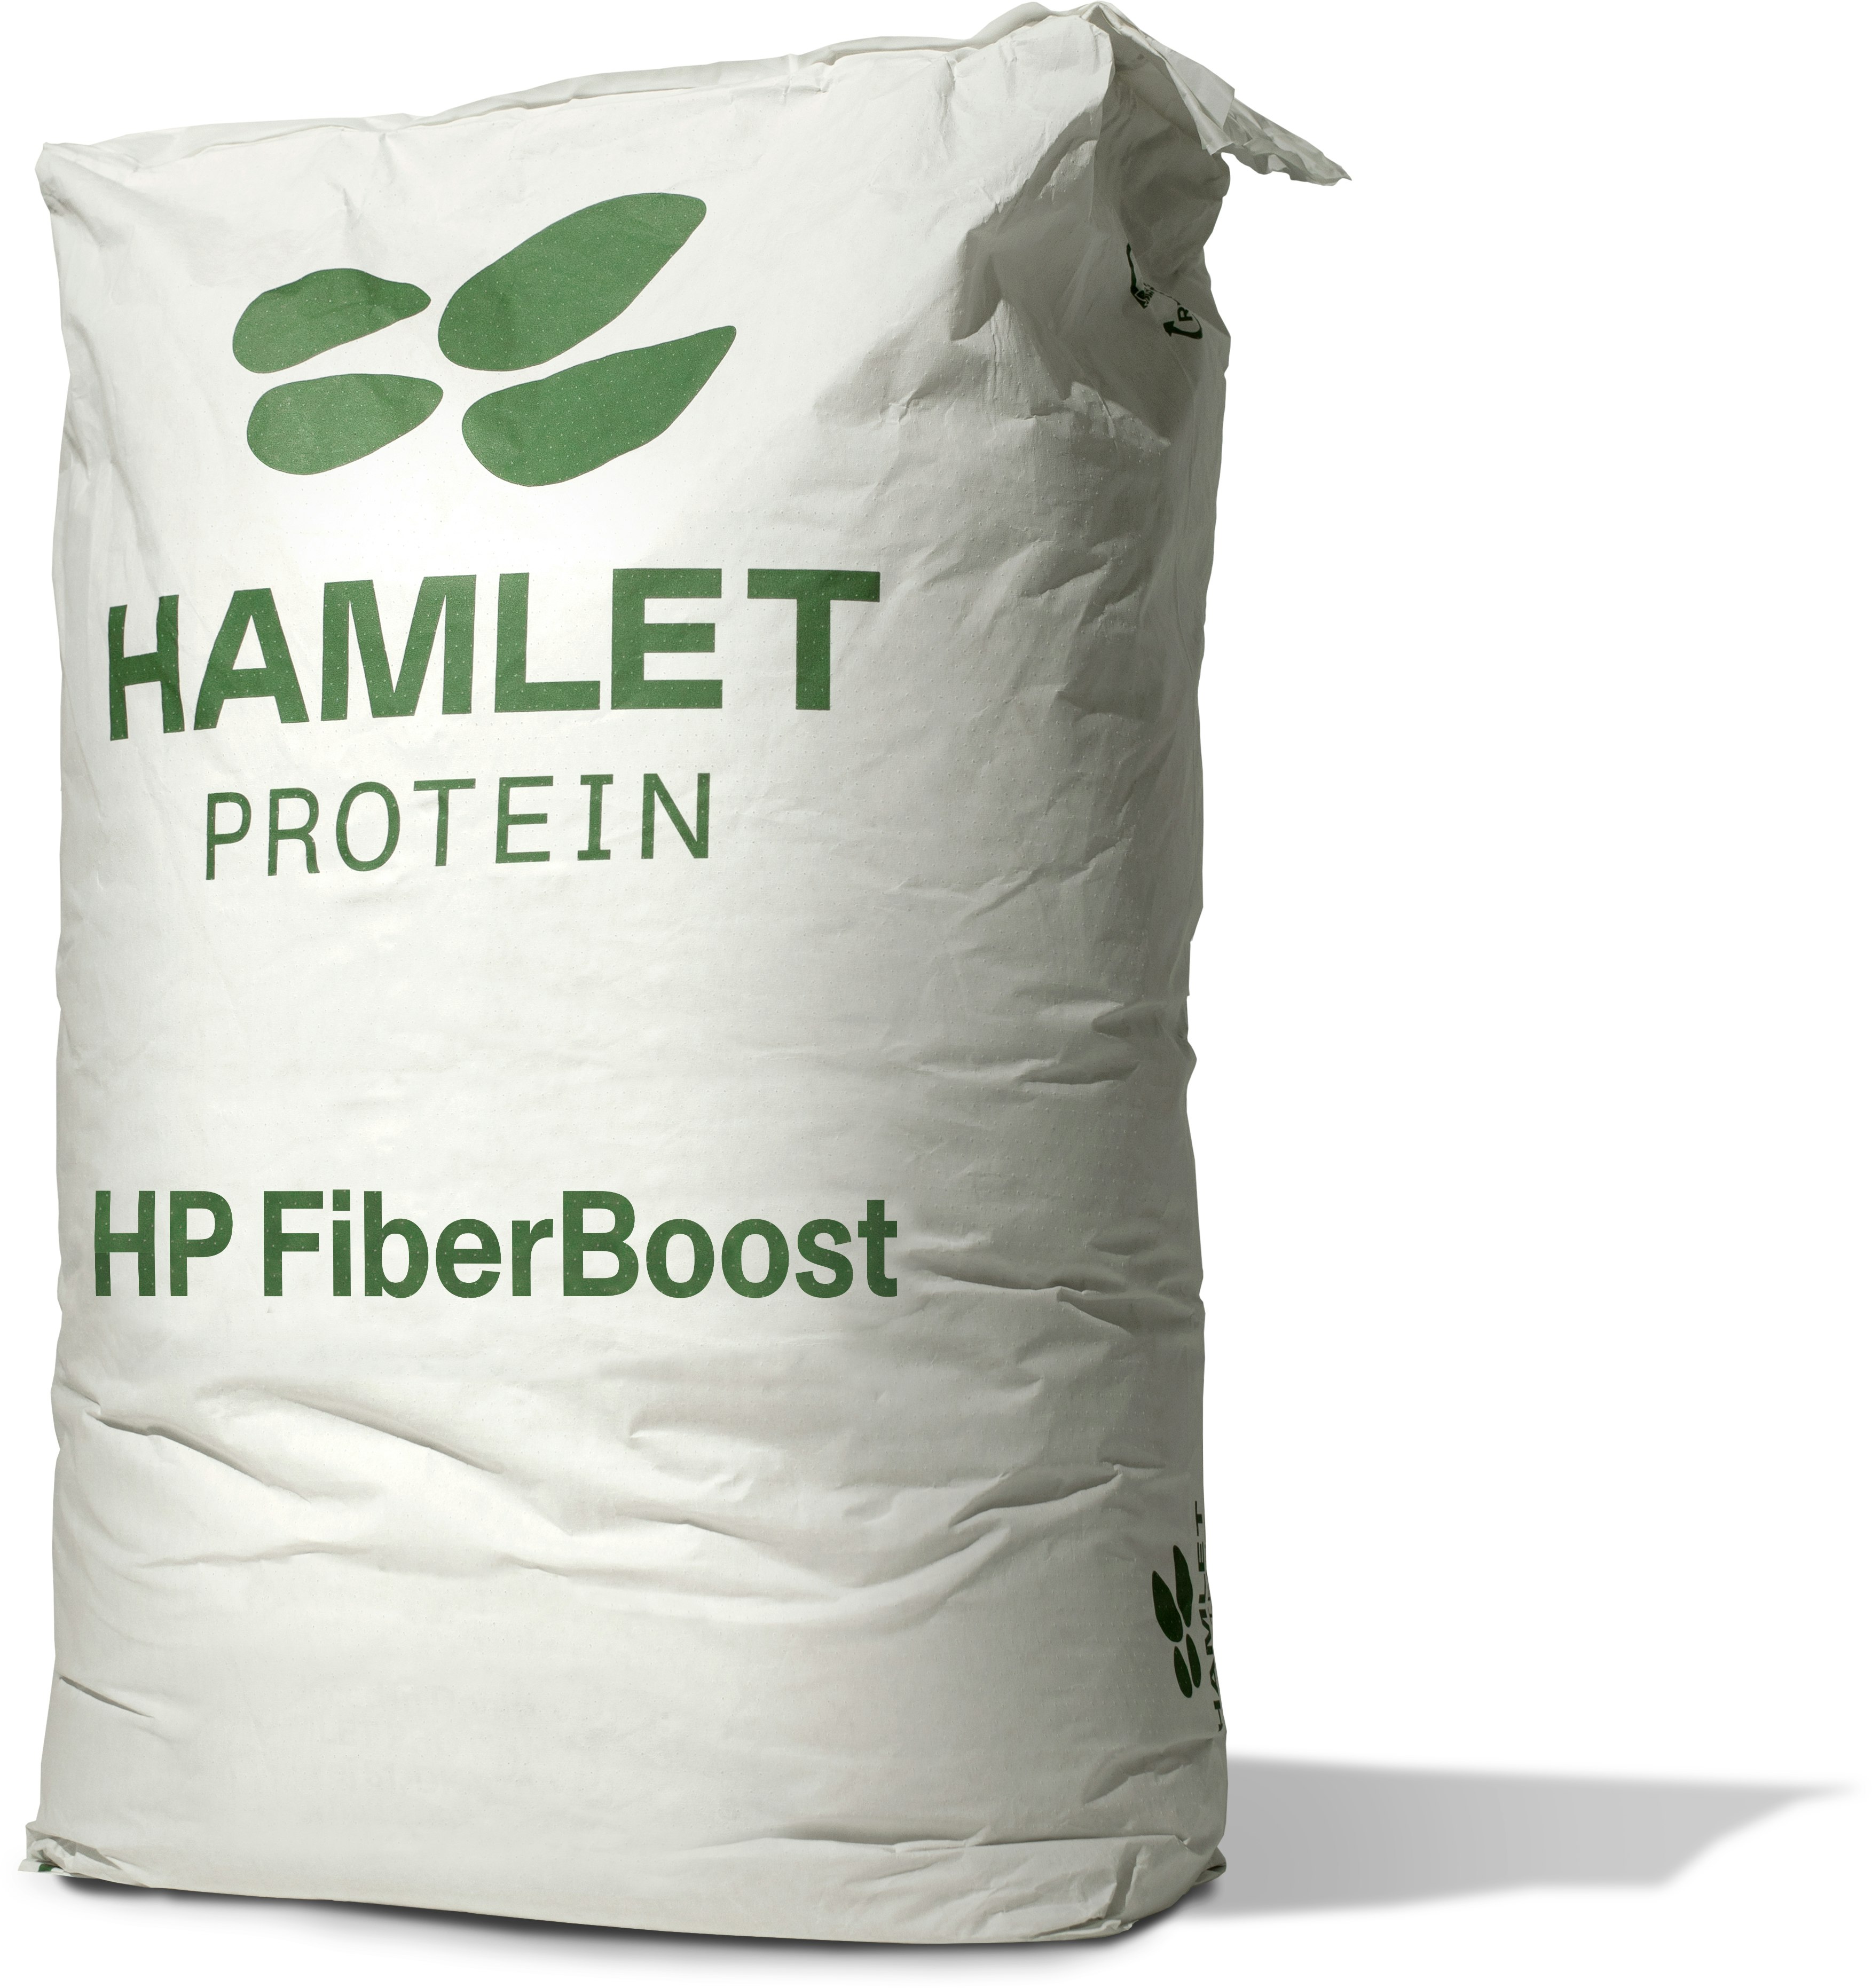 Hamlet-Protein-HP-FiberBoost.jpg